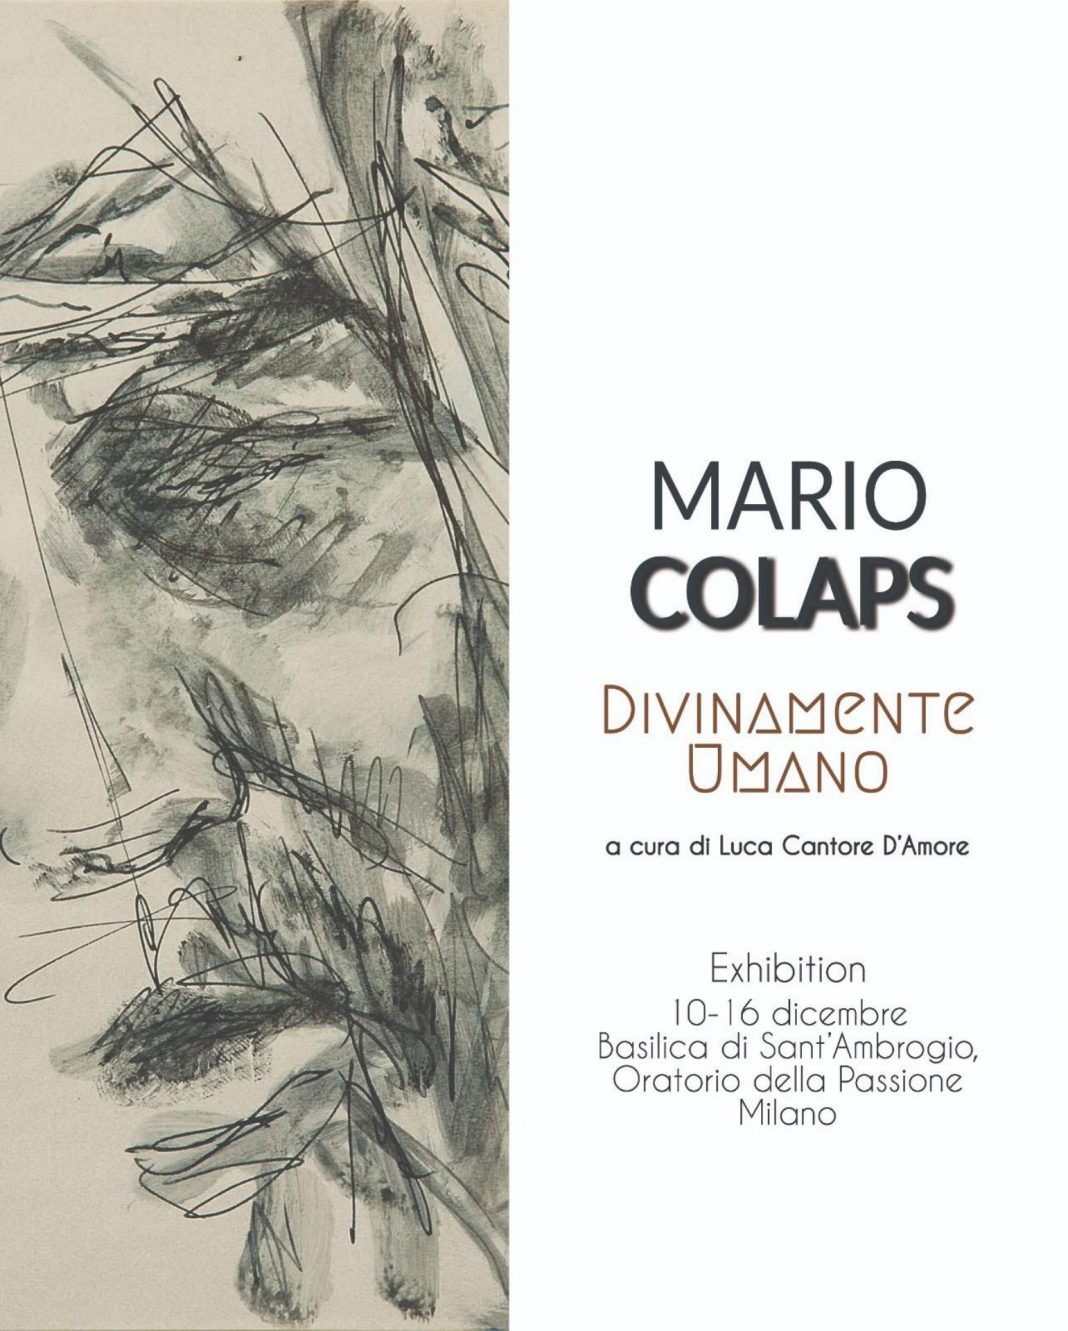 Mario Colaps – Divinamente umanohttps://www.exibart.com/repository/media/formidable/11/locandina-con-cornice-1-1068x1331.jpg